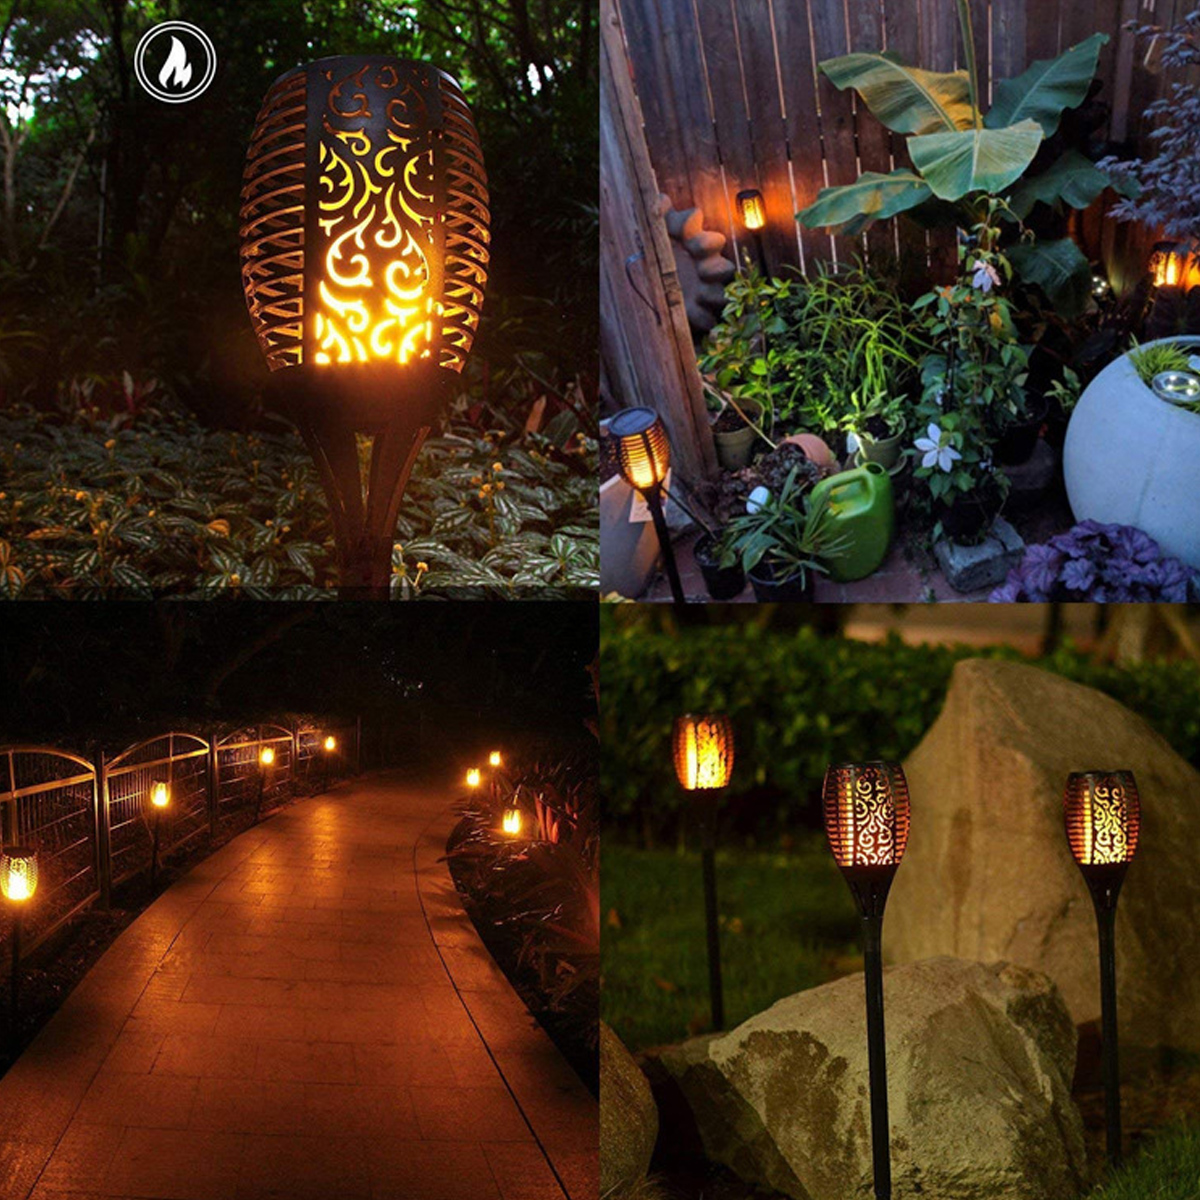 335196-LED-Solar-Garden-Flame-Light-Waterproof-Flickering-LED-Torch-Landscape-Christmas-Decorations--1712198-7